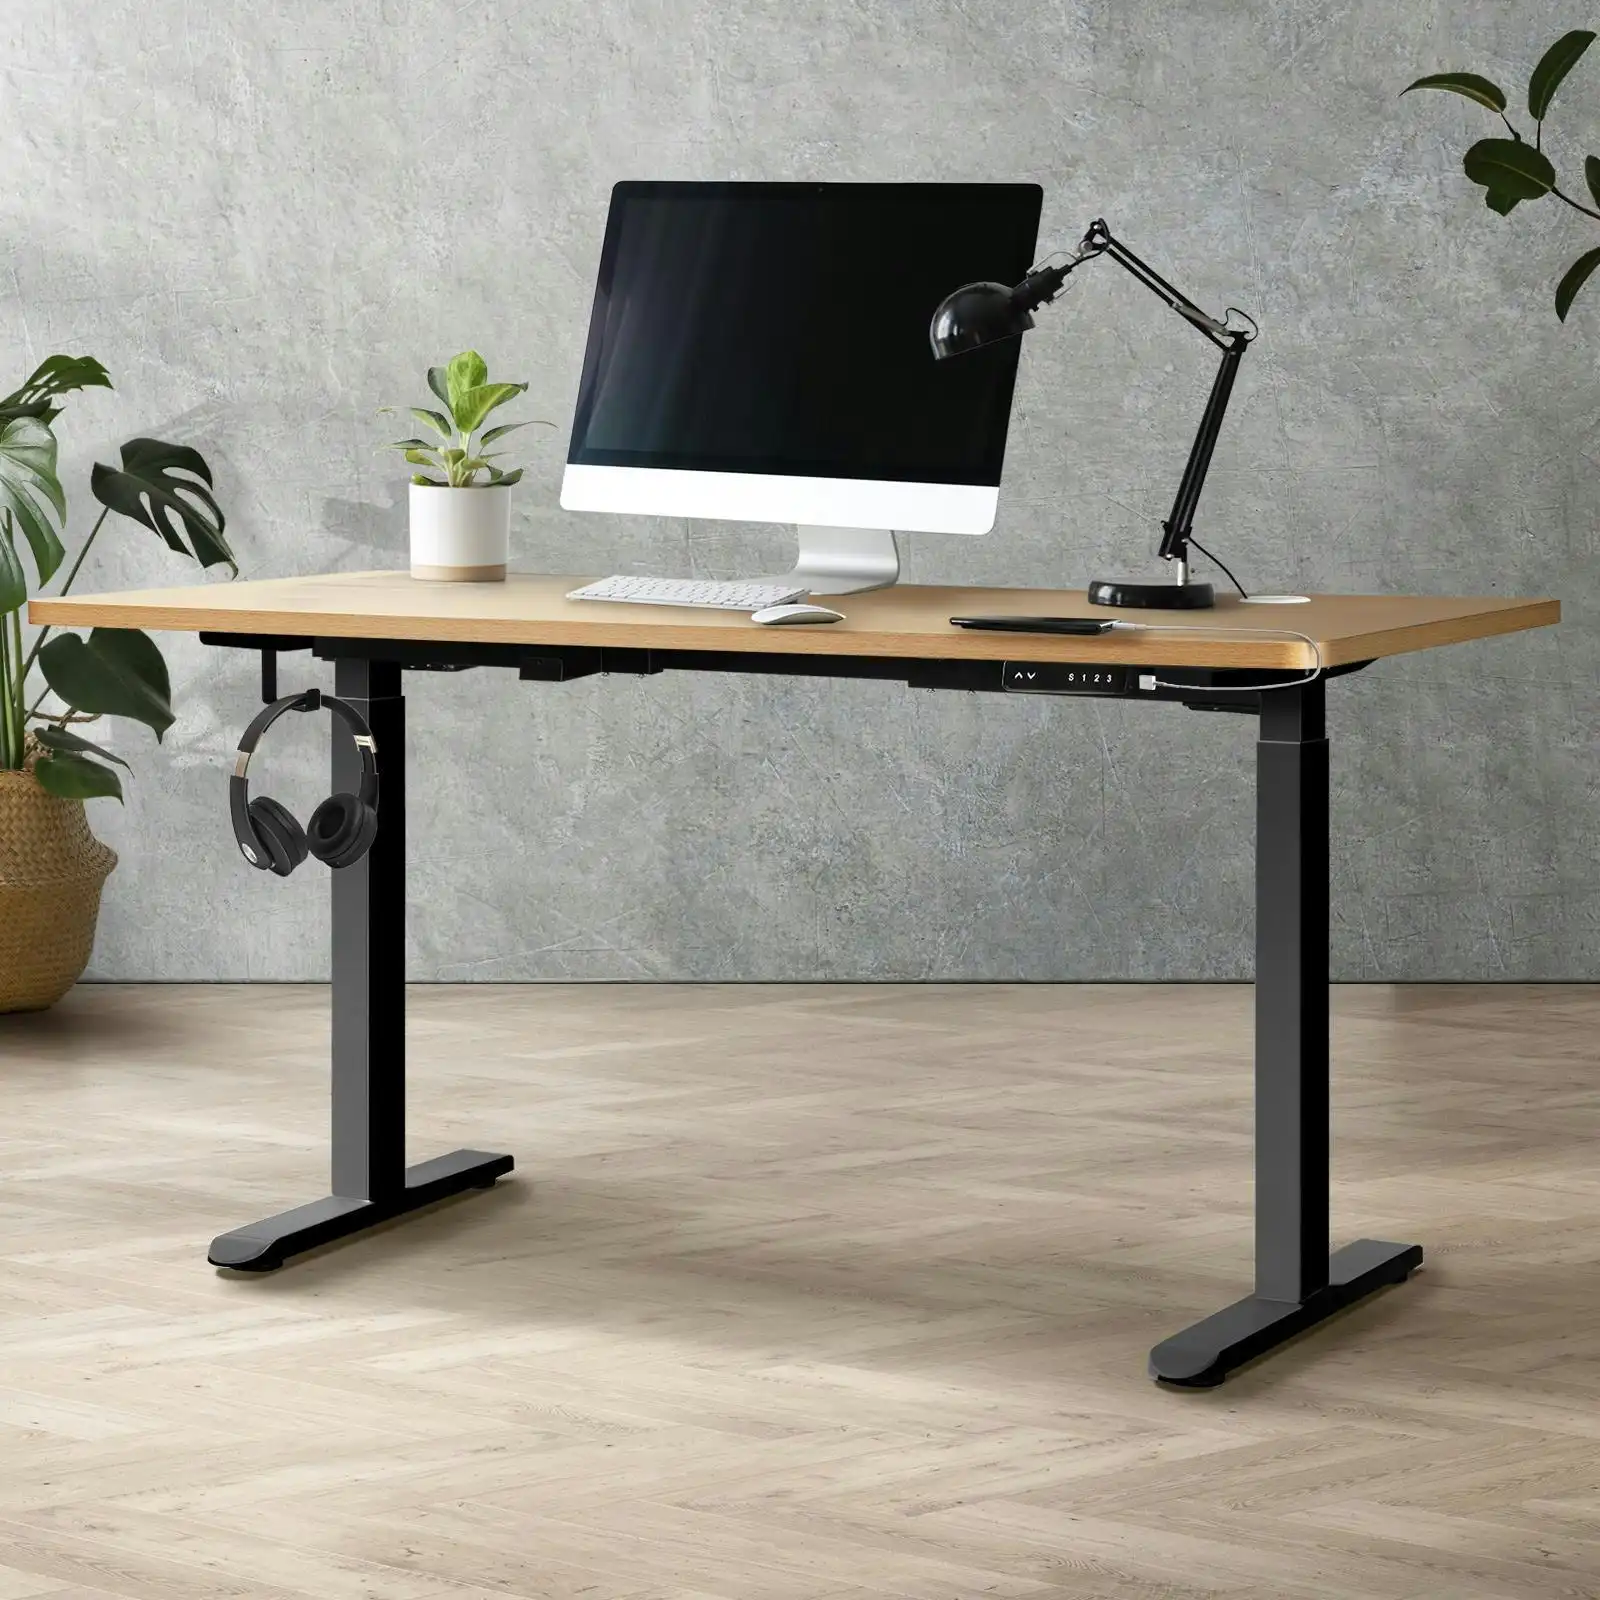 Oikiture 150cm Electric Standing Desk Dual Motor Black Frame OAK Desktop With USB&Type C Port